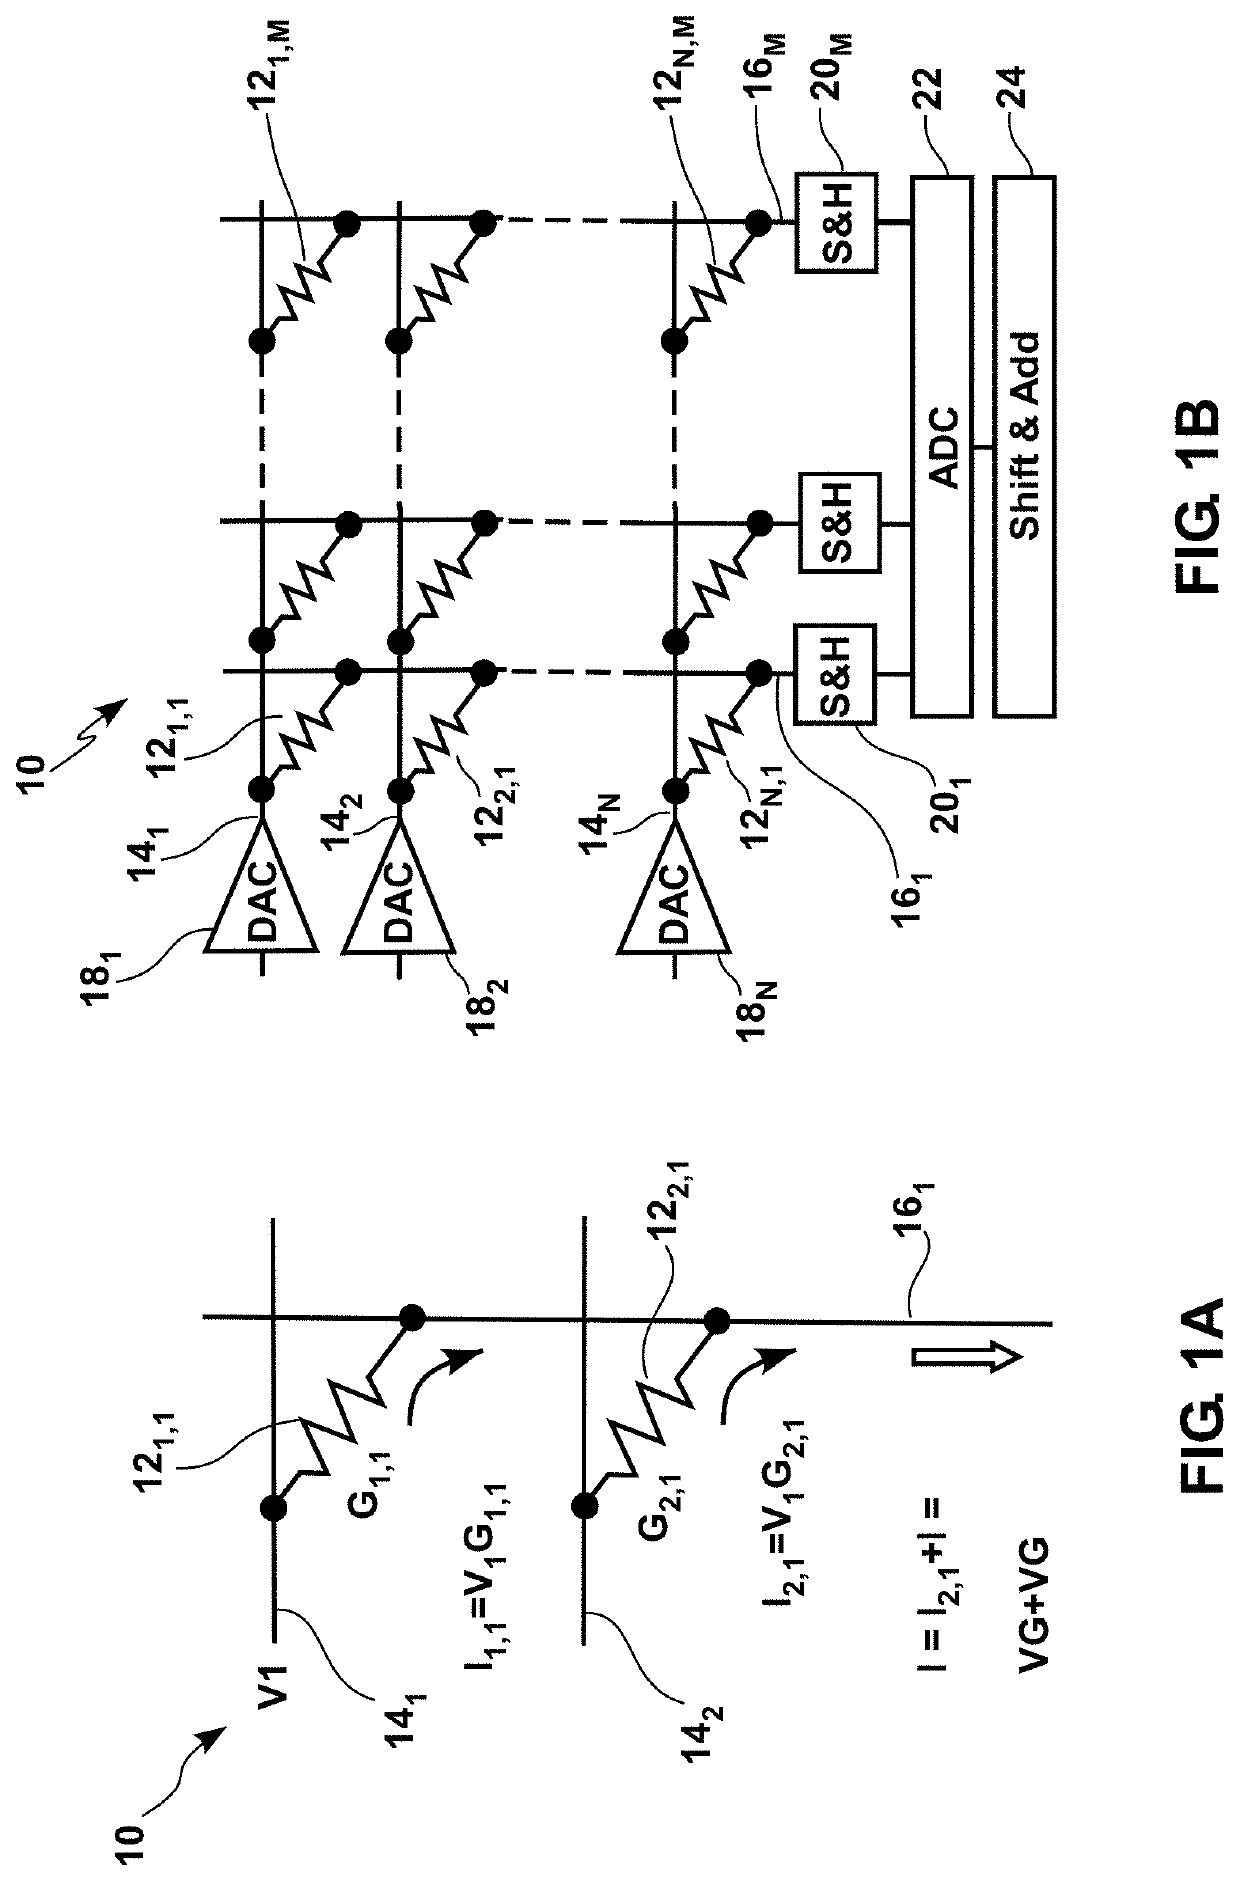 Transistorless all-memristor neuromorphic circuits for in-memory computing